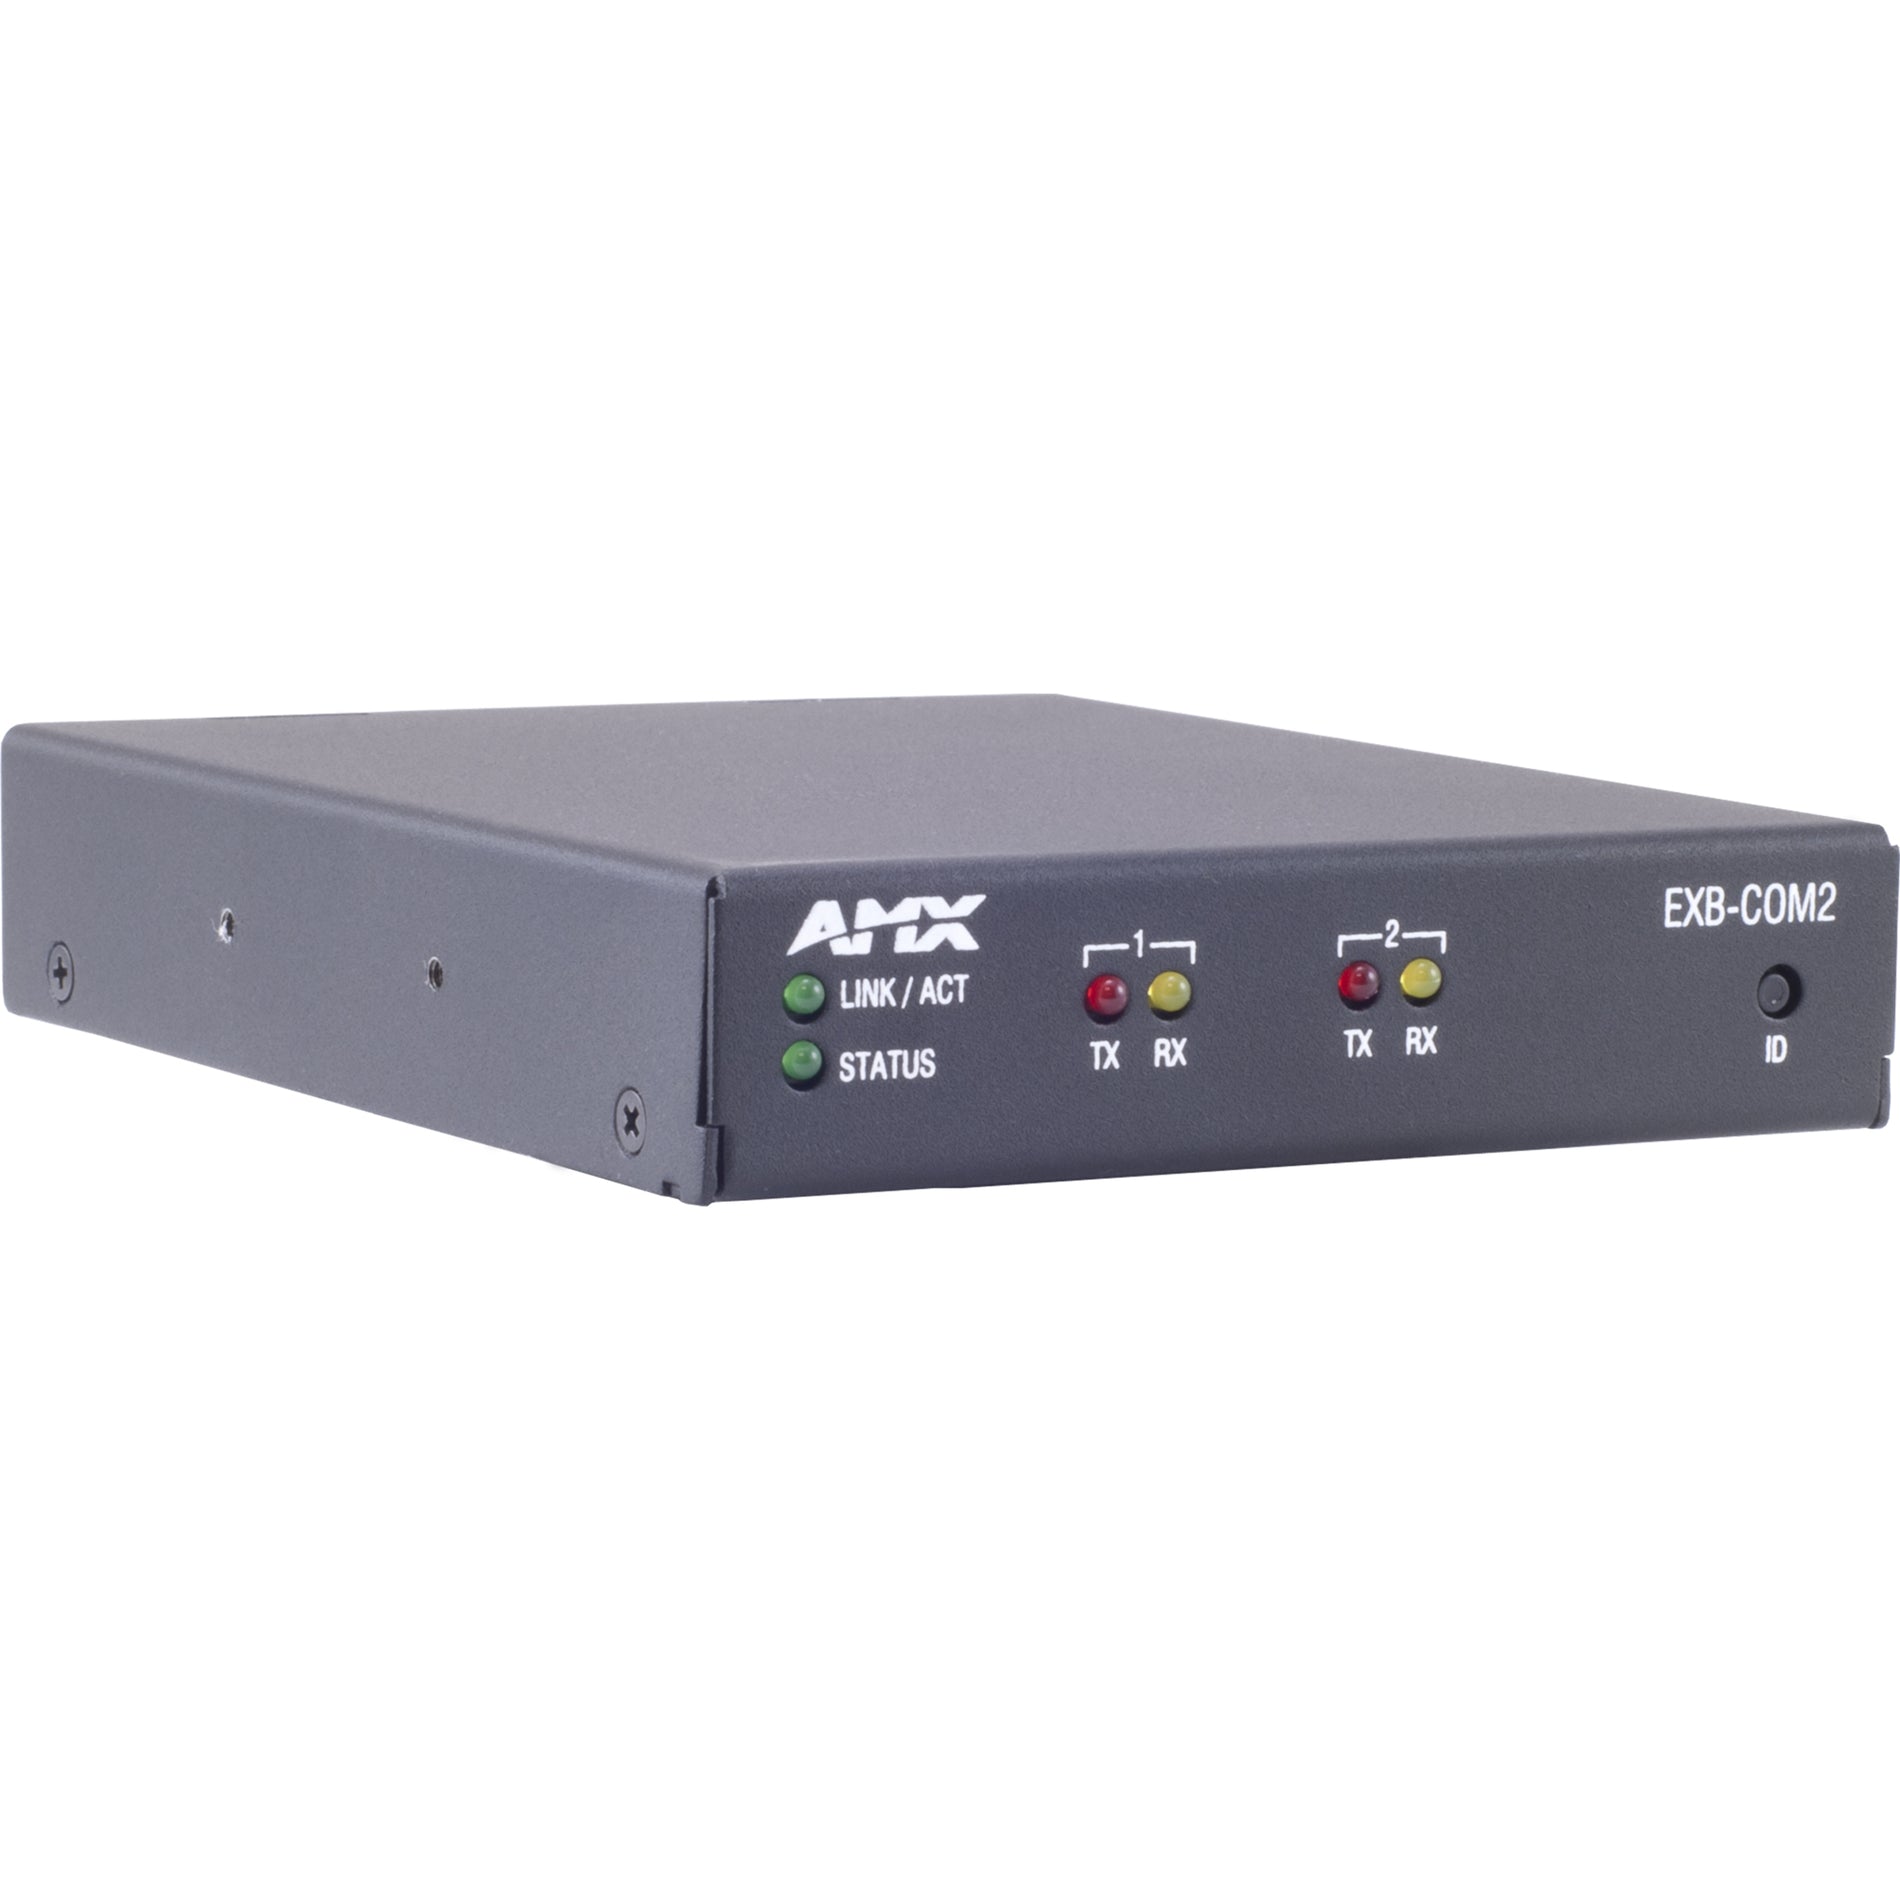 AMX FG2100-22 ICSLan EXB-COM2 Automation Controller Equipment, Future-Proof Solution for Easy Port Expansion